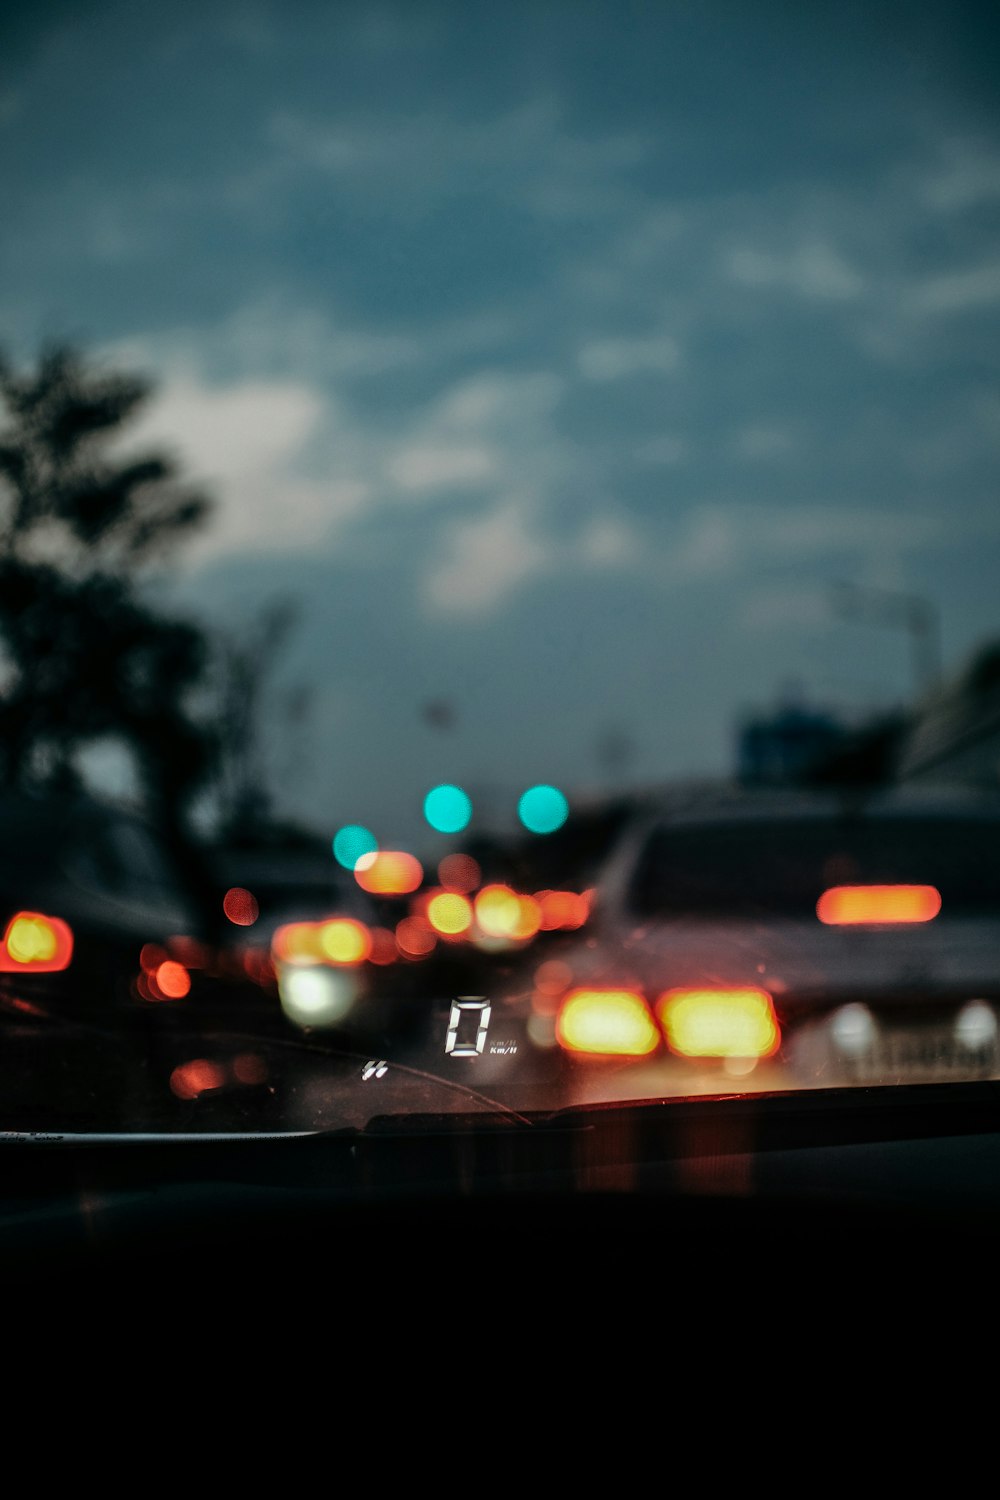 carros na estrada durante a noite